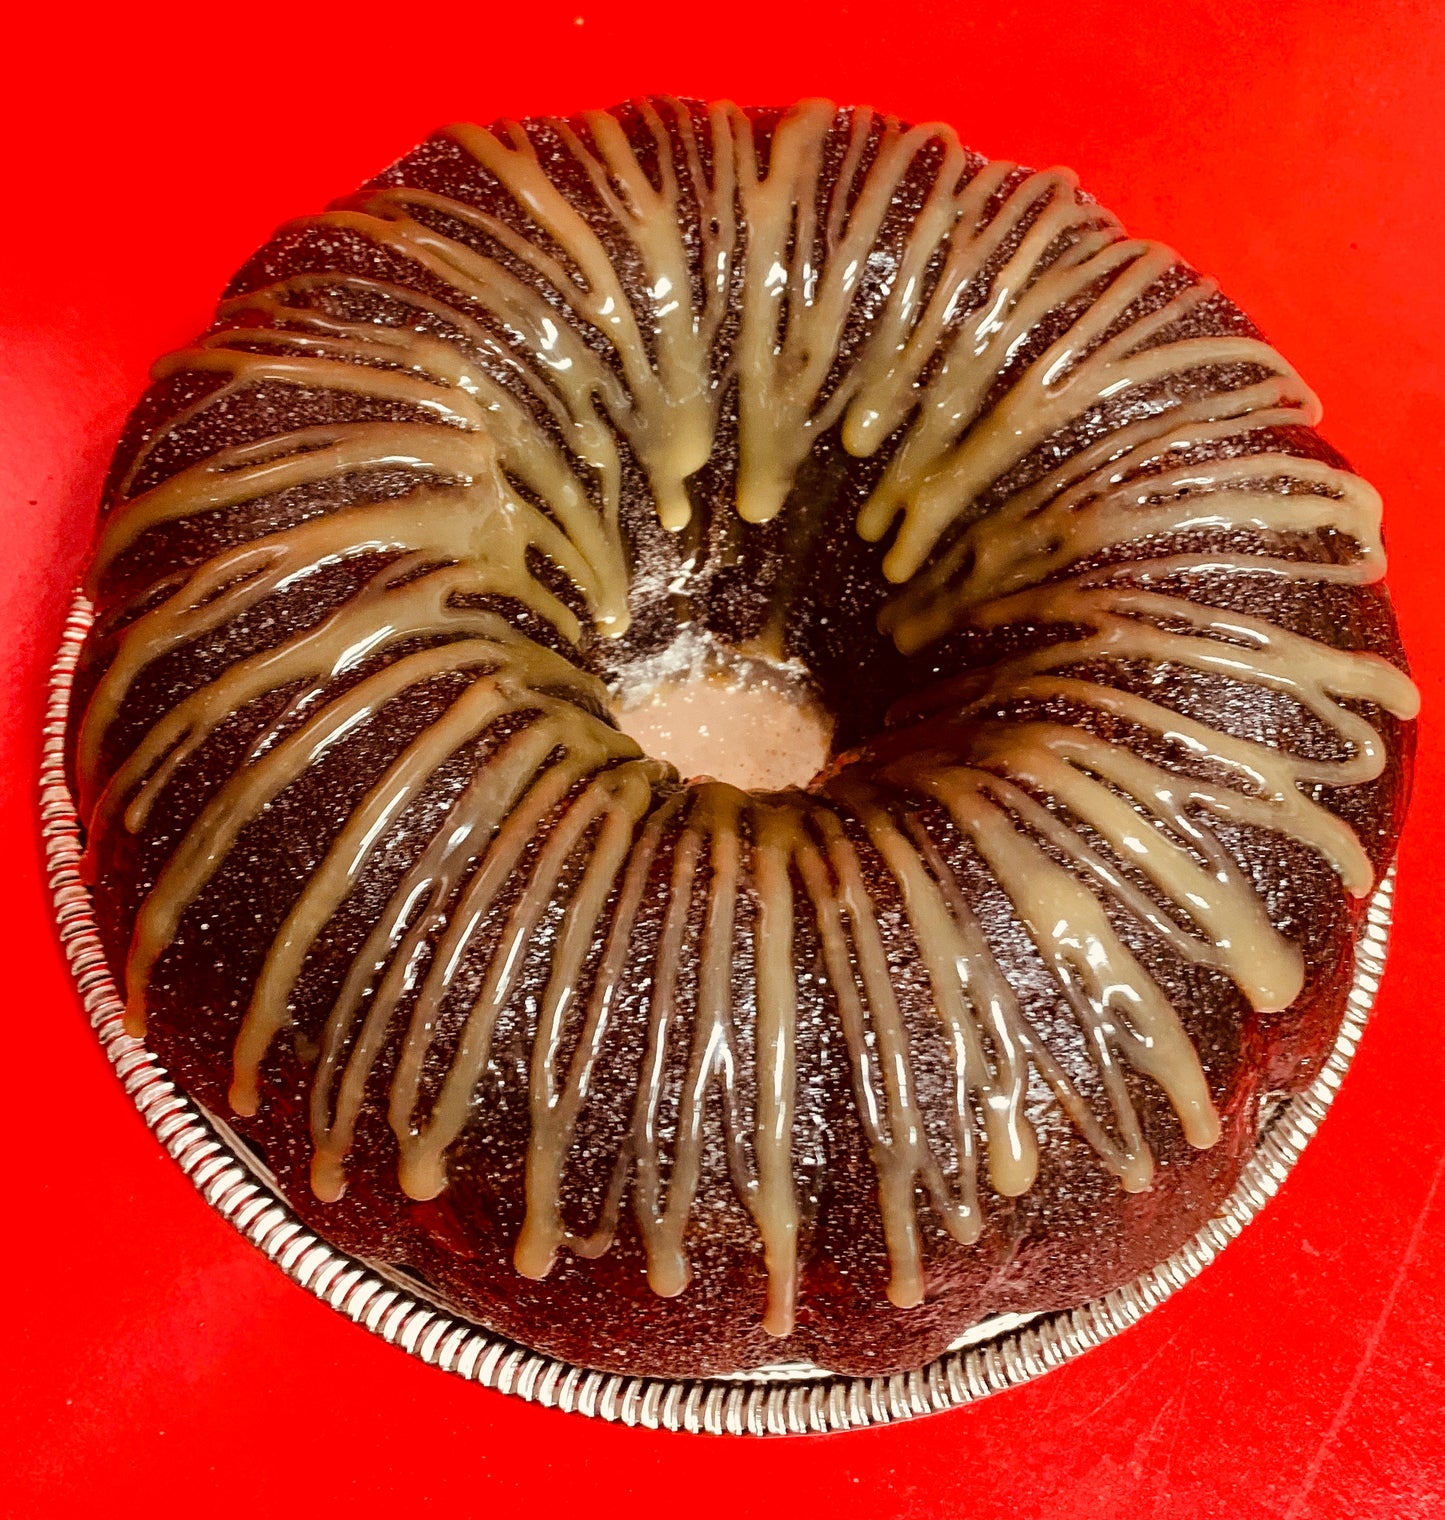 C. Chocolate Salted Caramel Large Bundt Cake